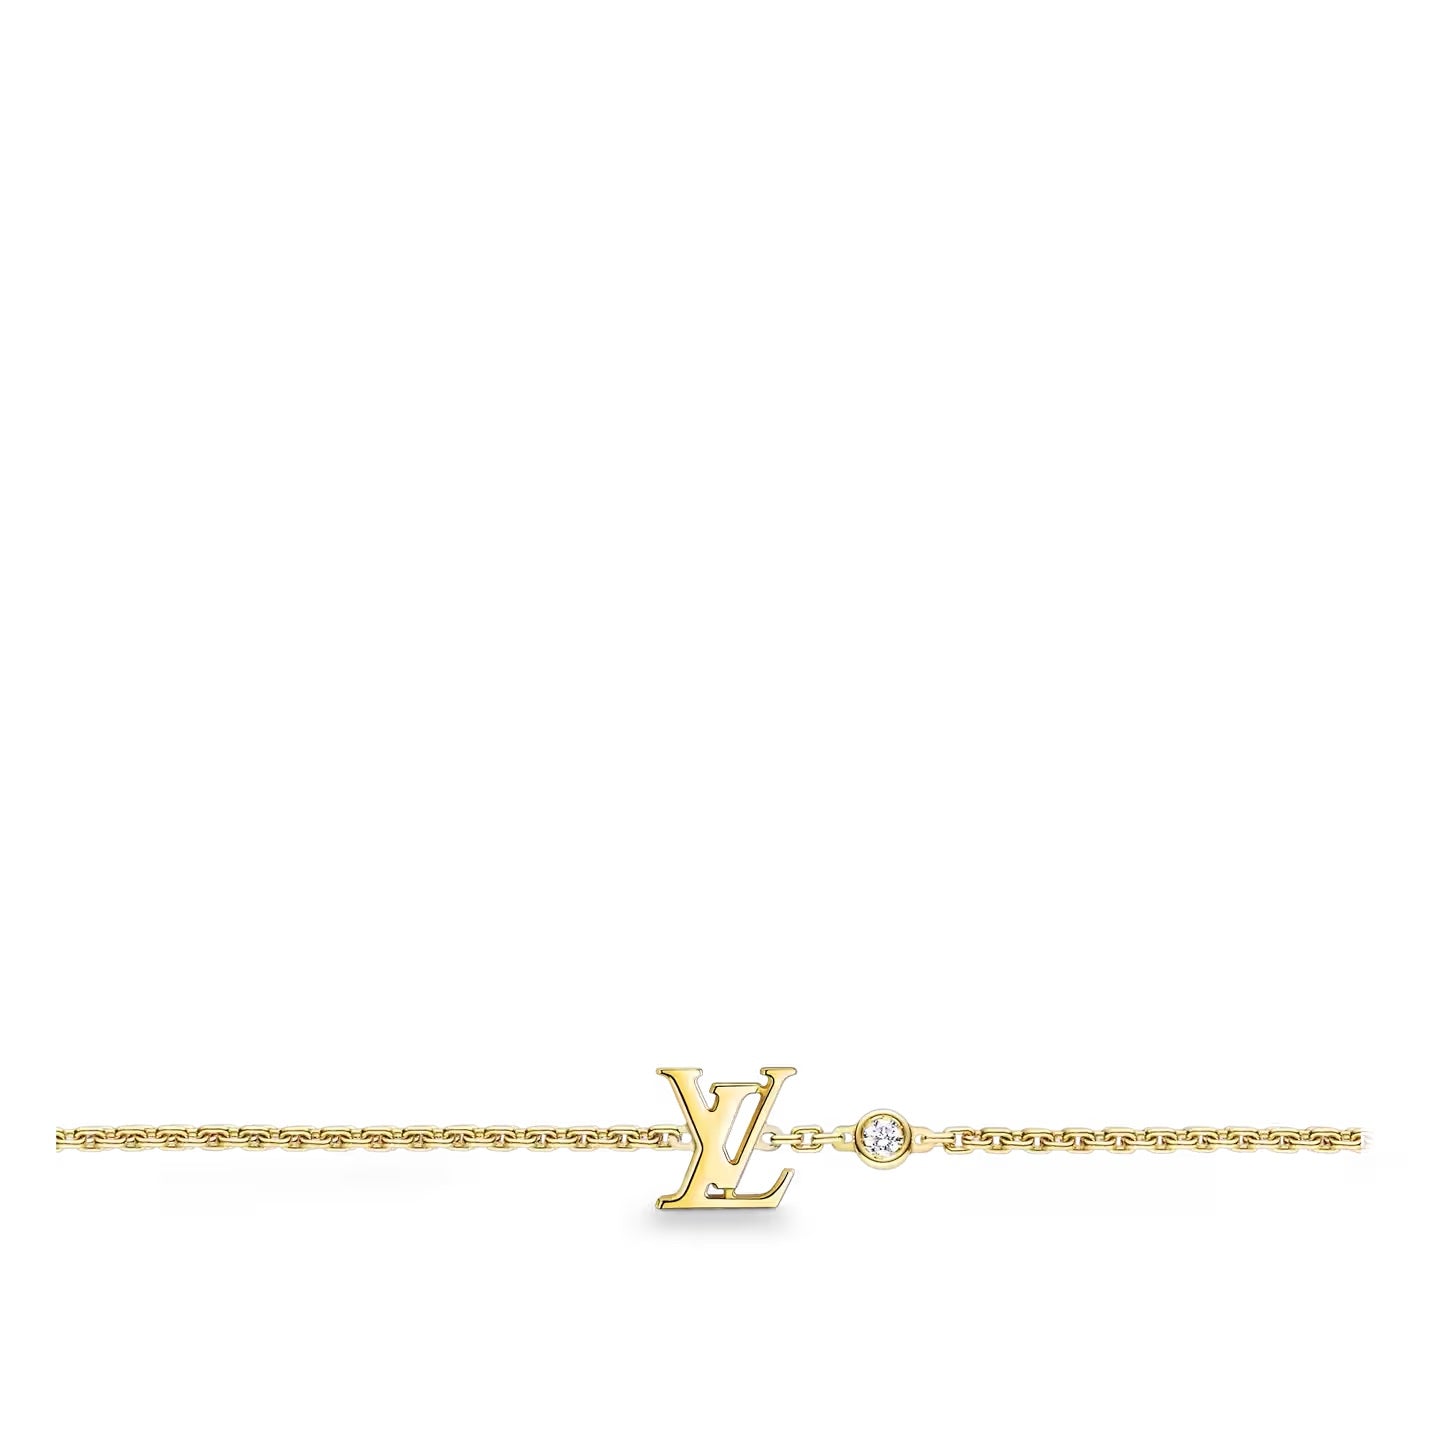 Shop Louis Vuitton Idylle blossom lv bracelet, pink gold and